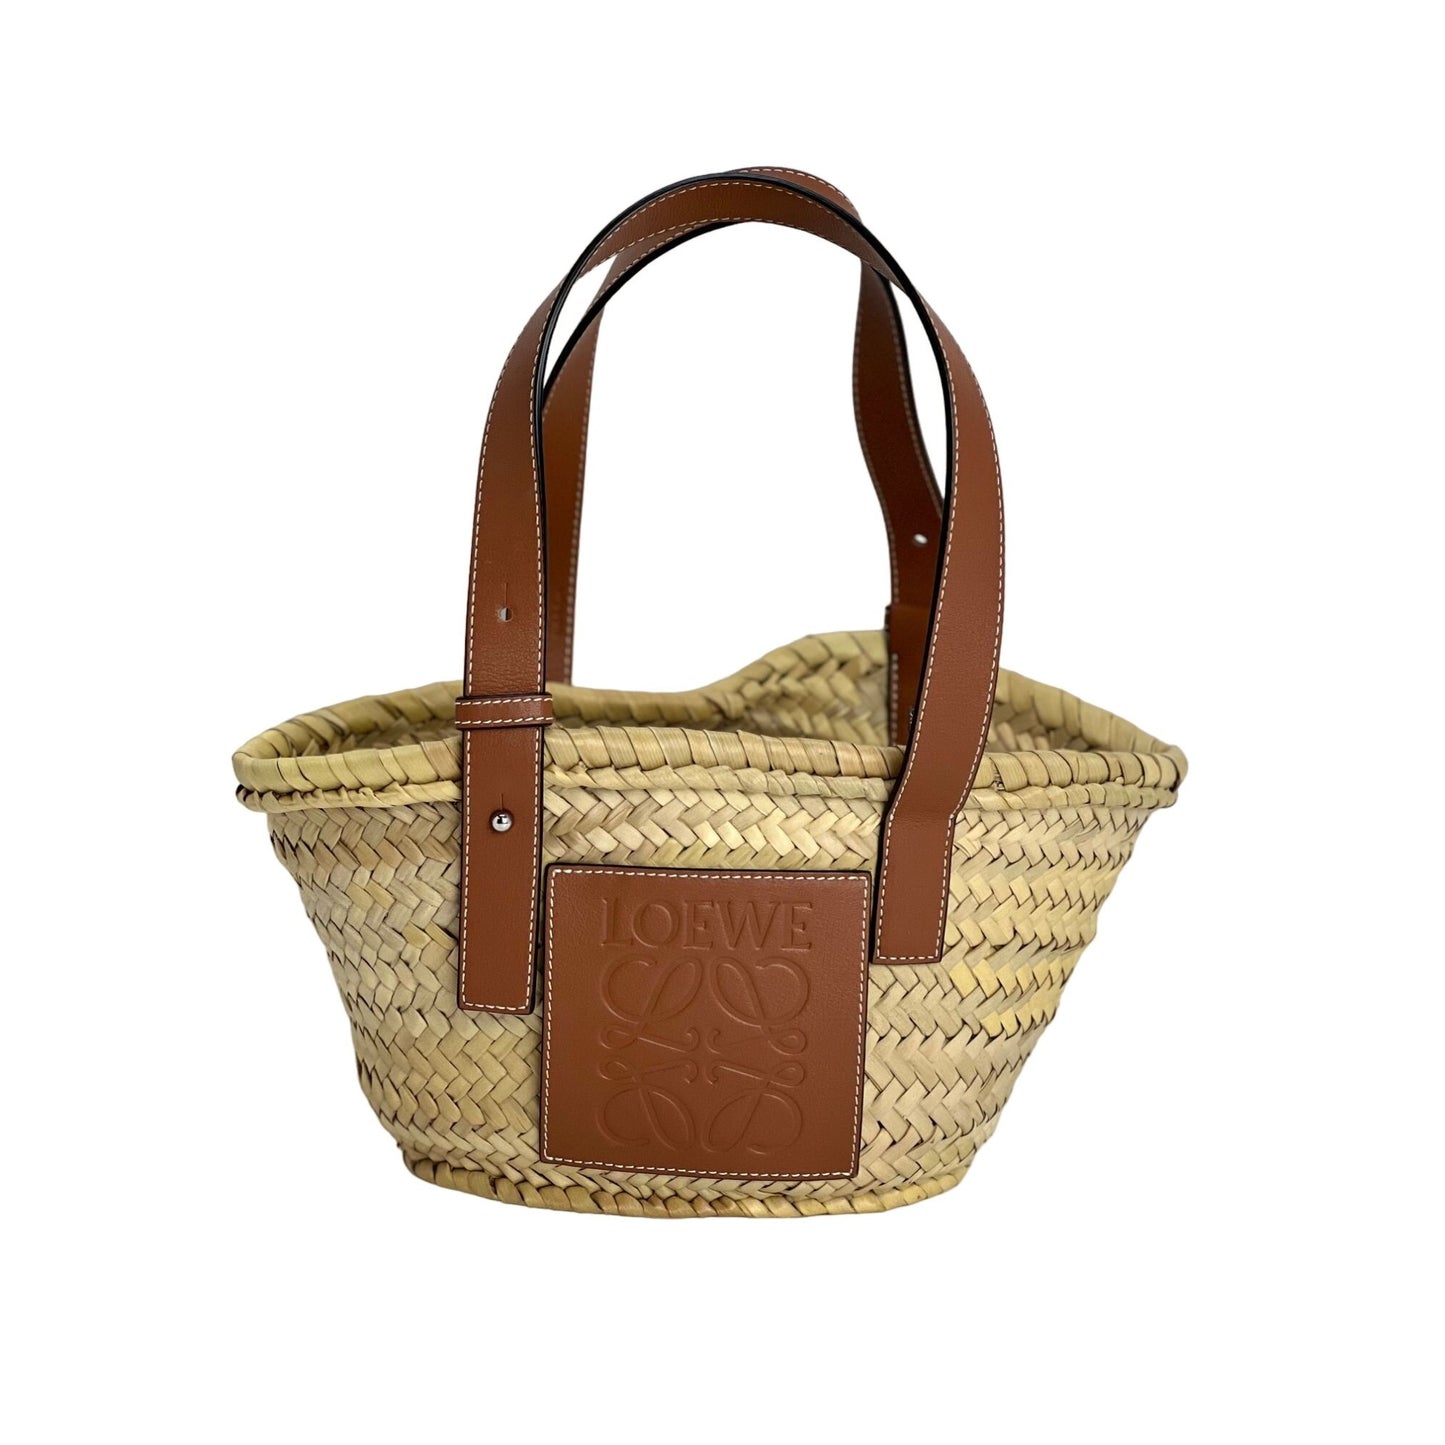 Loewe Small or Medium Basket Bag? Anyone own this bag and can